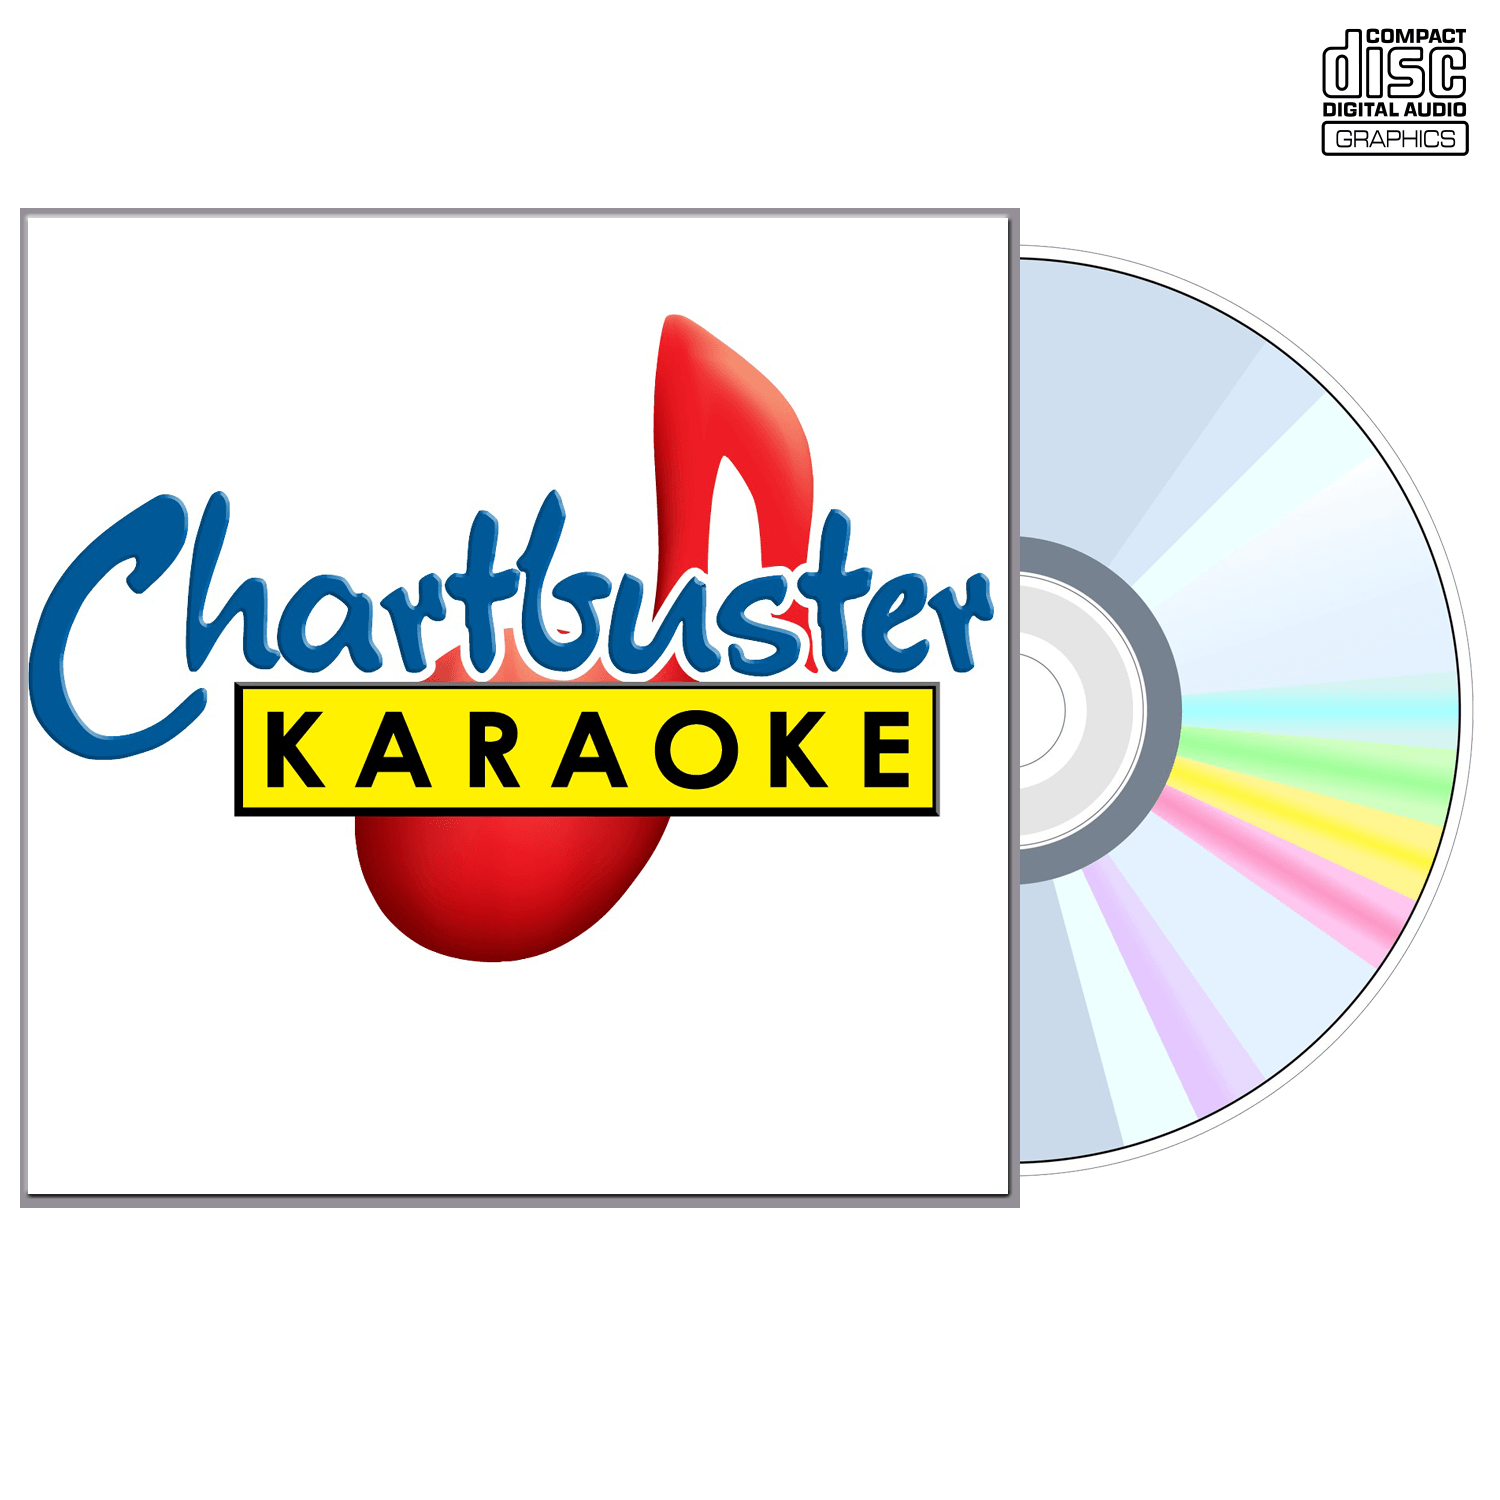 ACDC - CD+G - Chartbuster Karaoke - Karaoke Home Entertainment